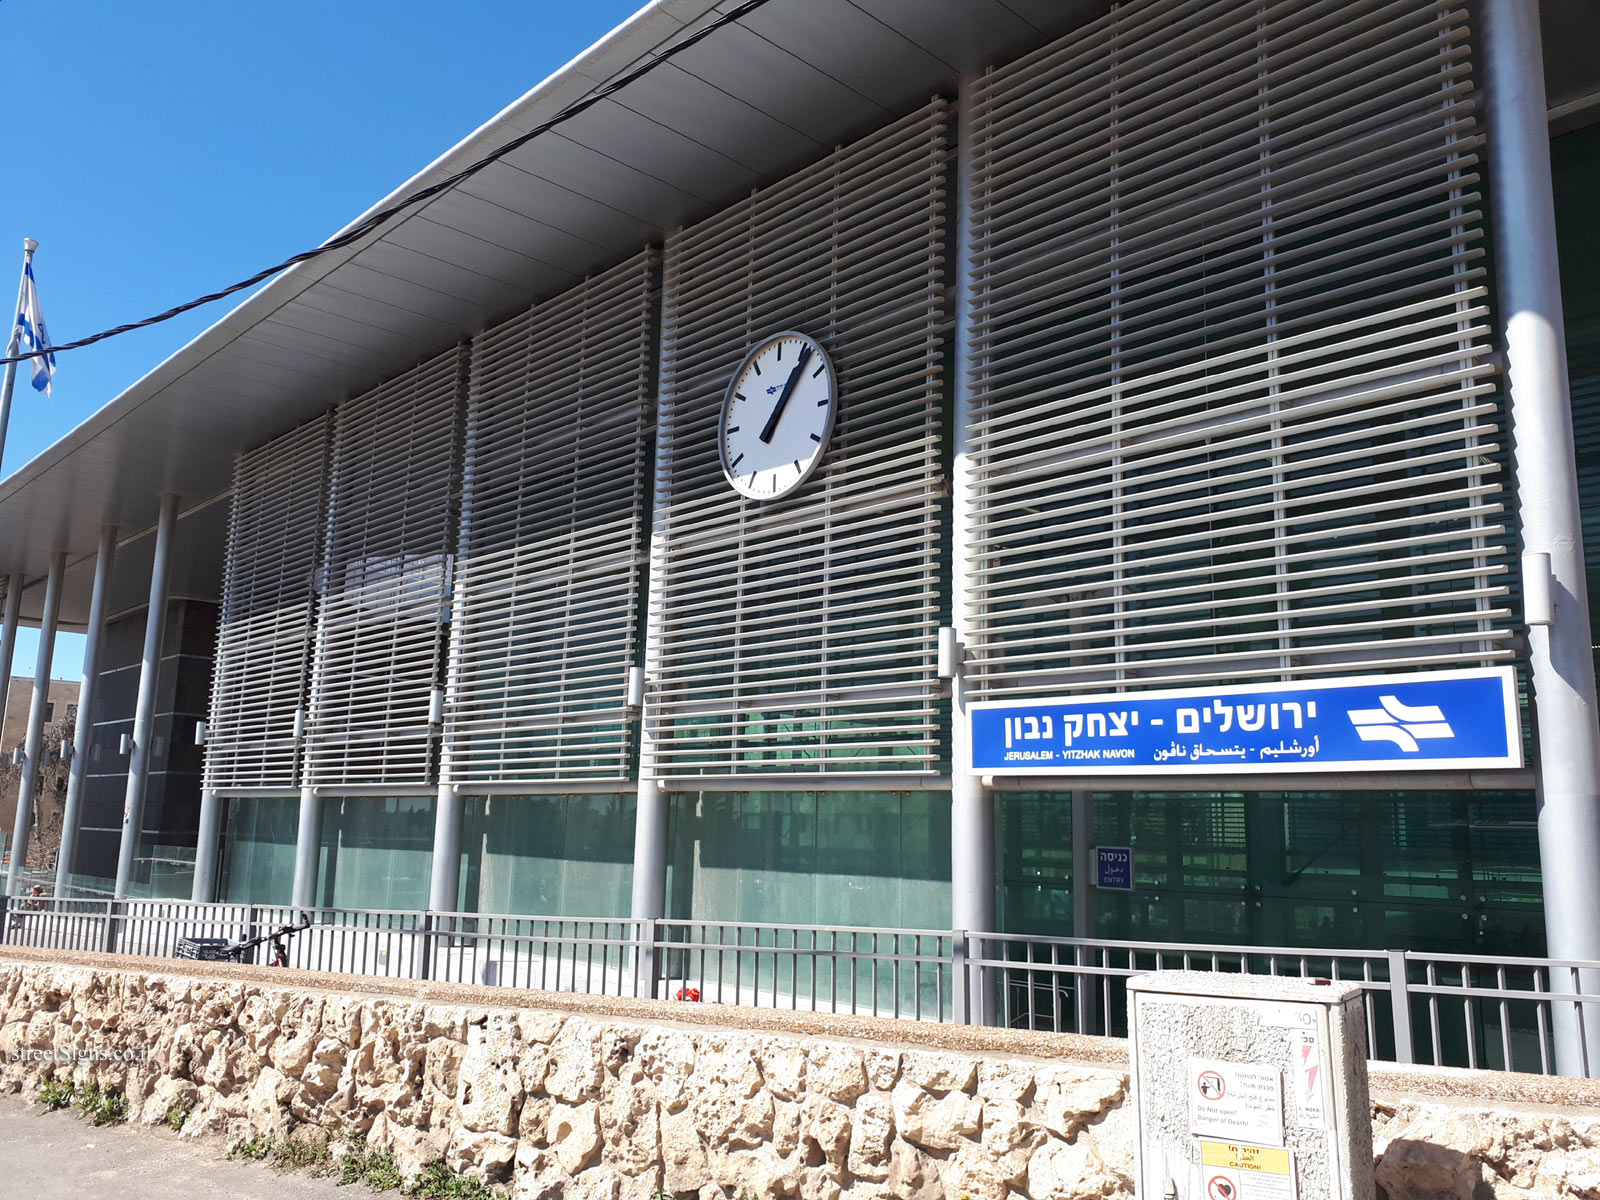 Jerusalem - Israel Train - Yitzhak Navon Station